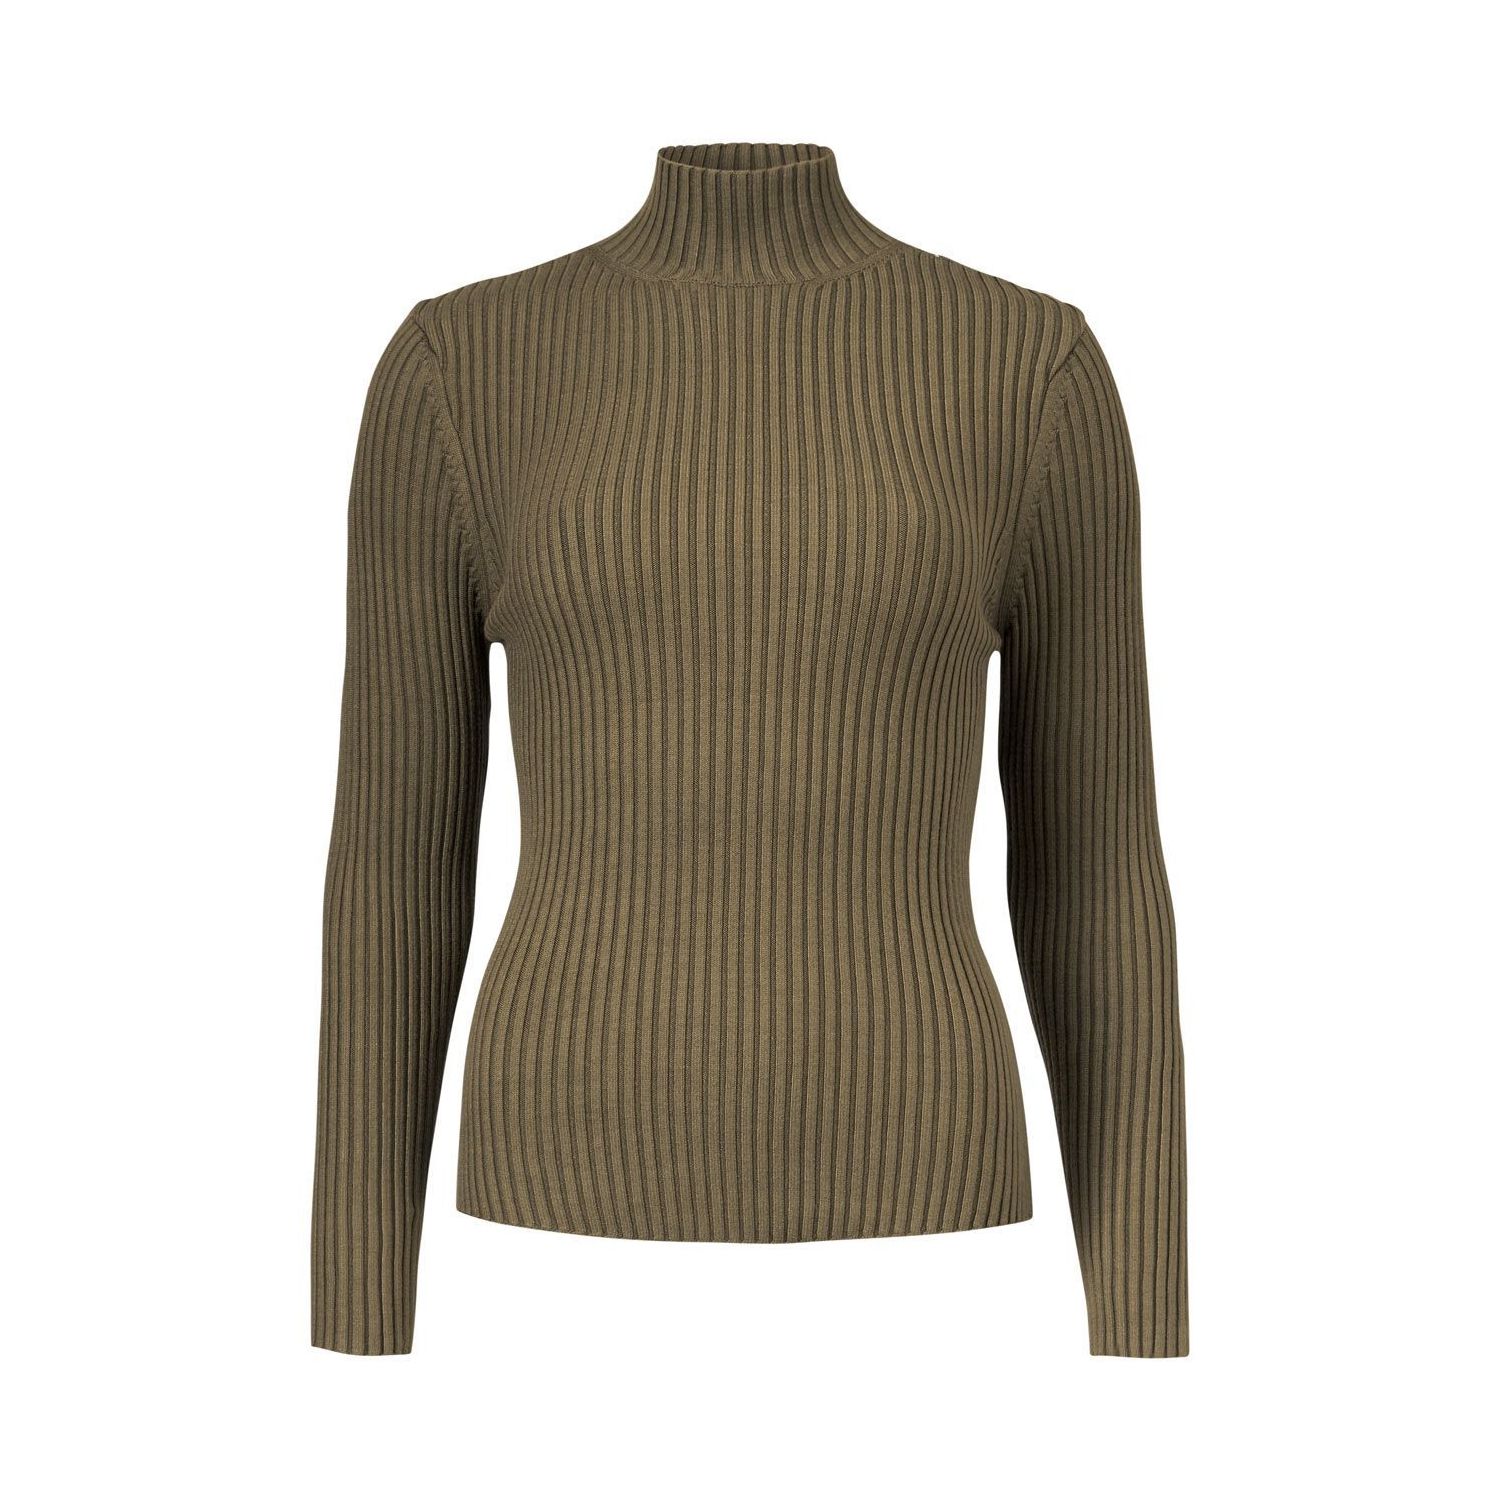 Modstrom saul t-neck knit sweater bronze